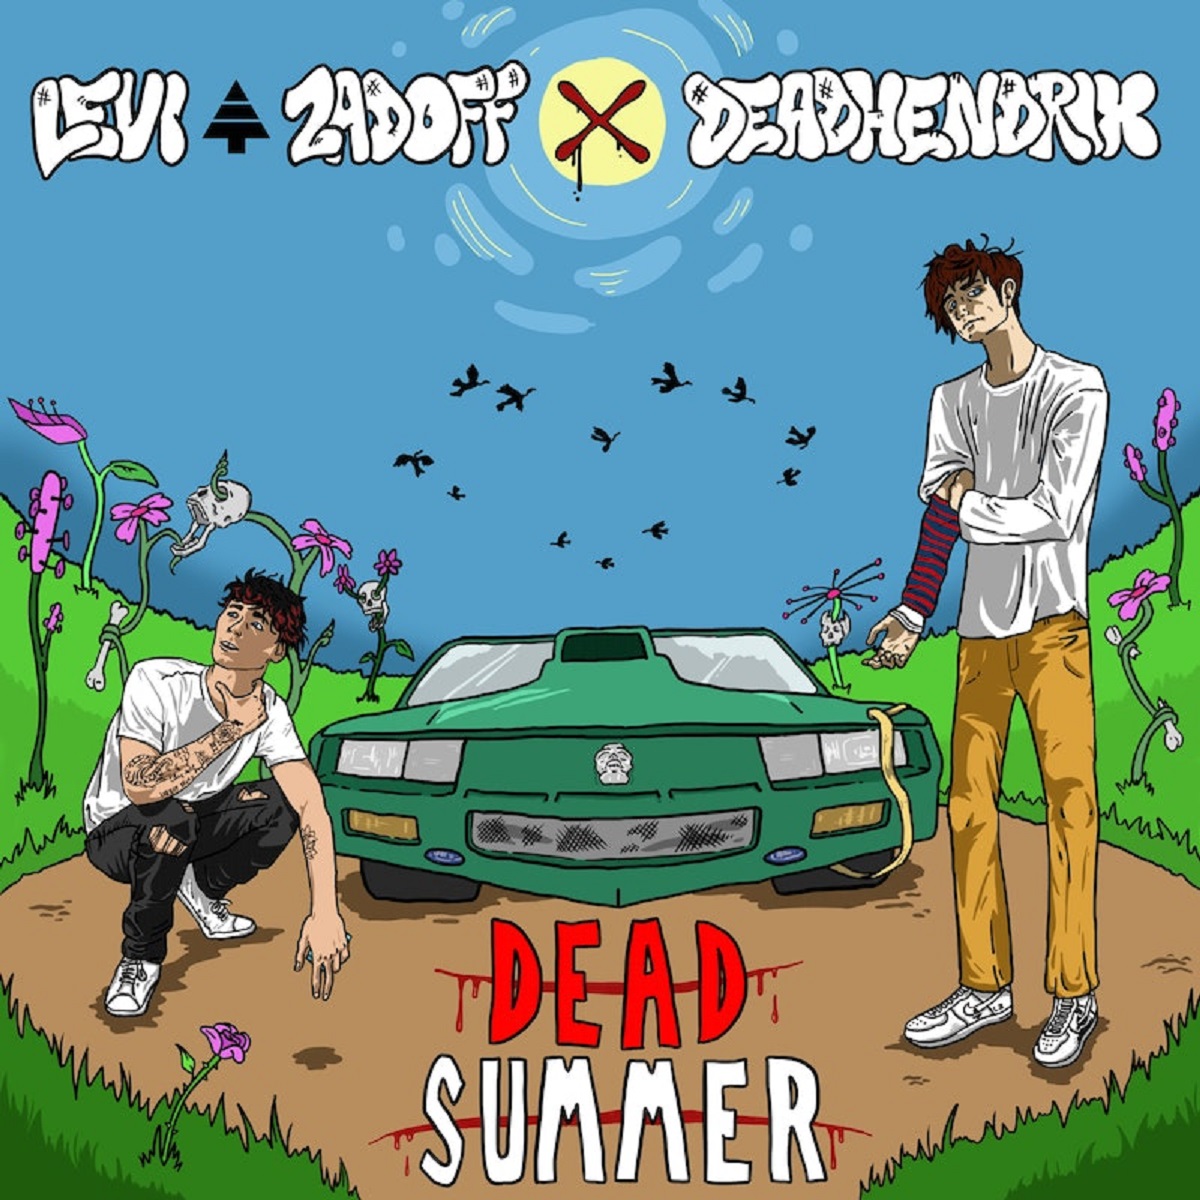 Levi Zadoff and Dead Hendrix unite for Dead Summer EP